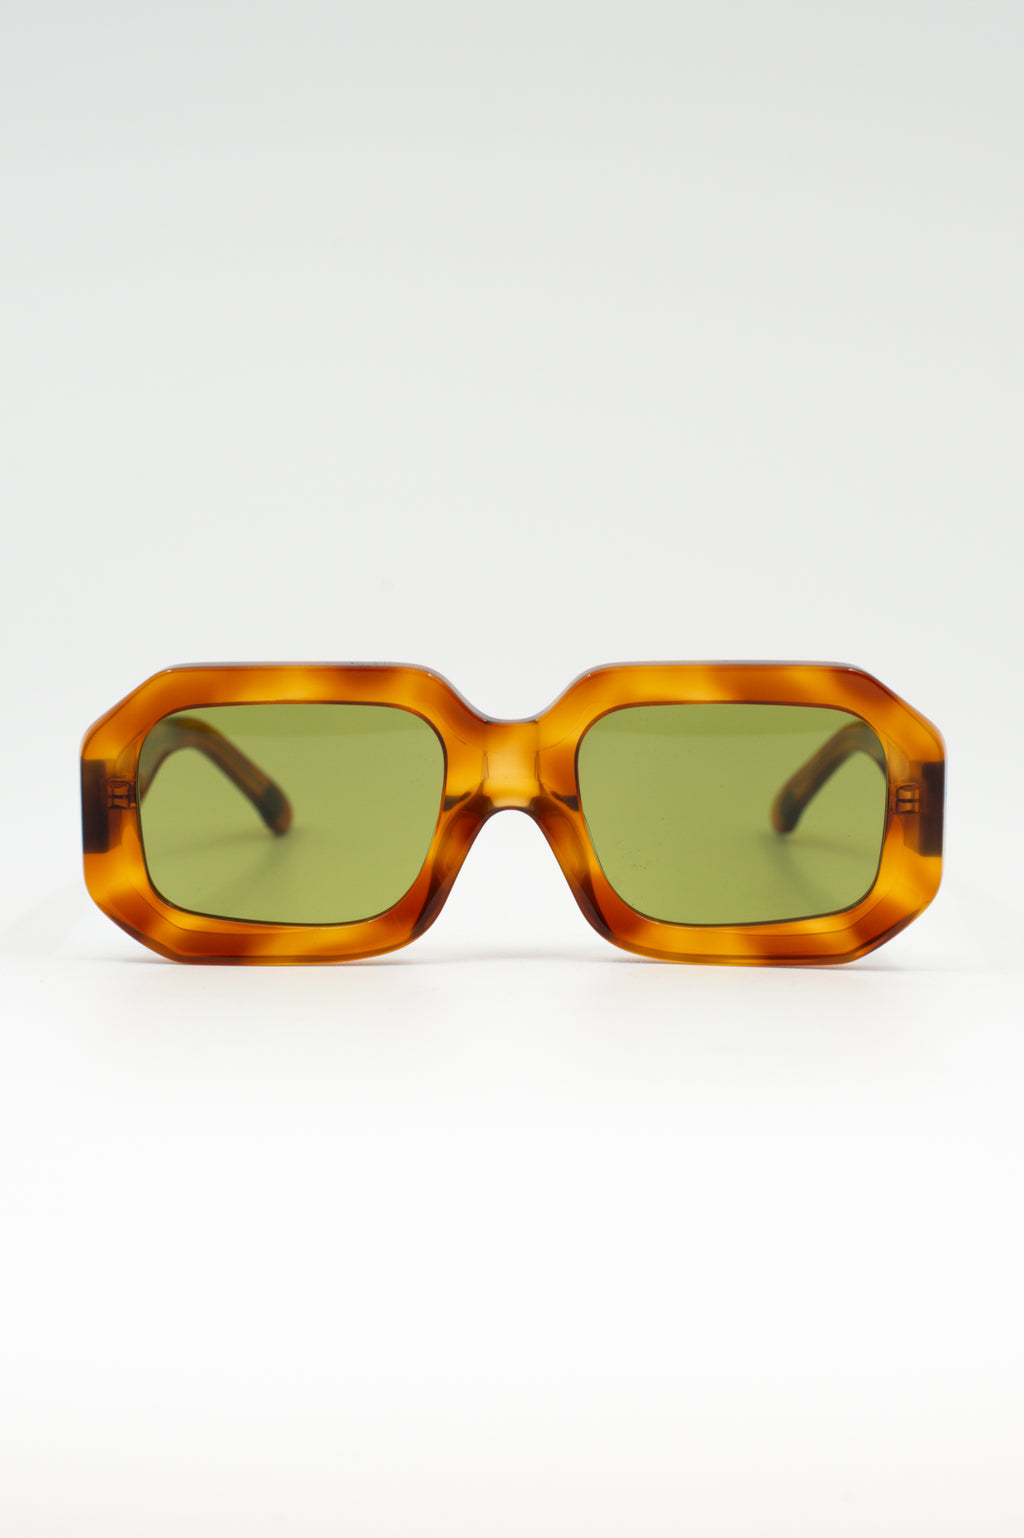 Jackie sunglasses in light tortoise /olive